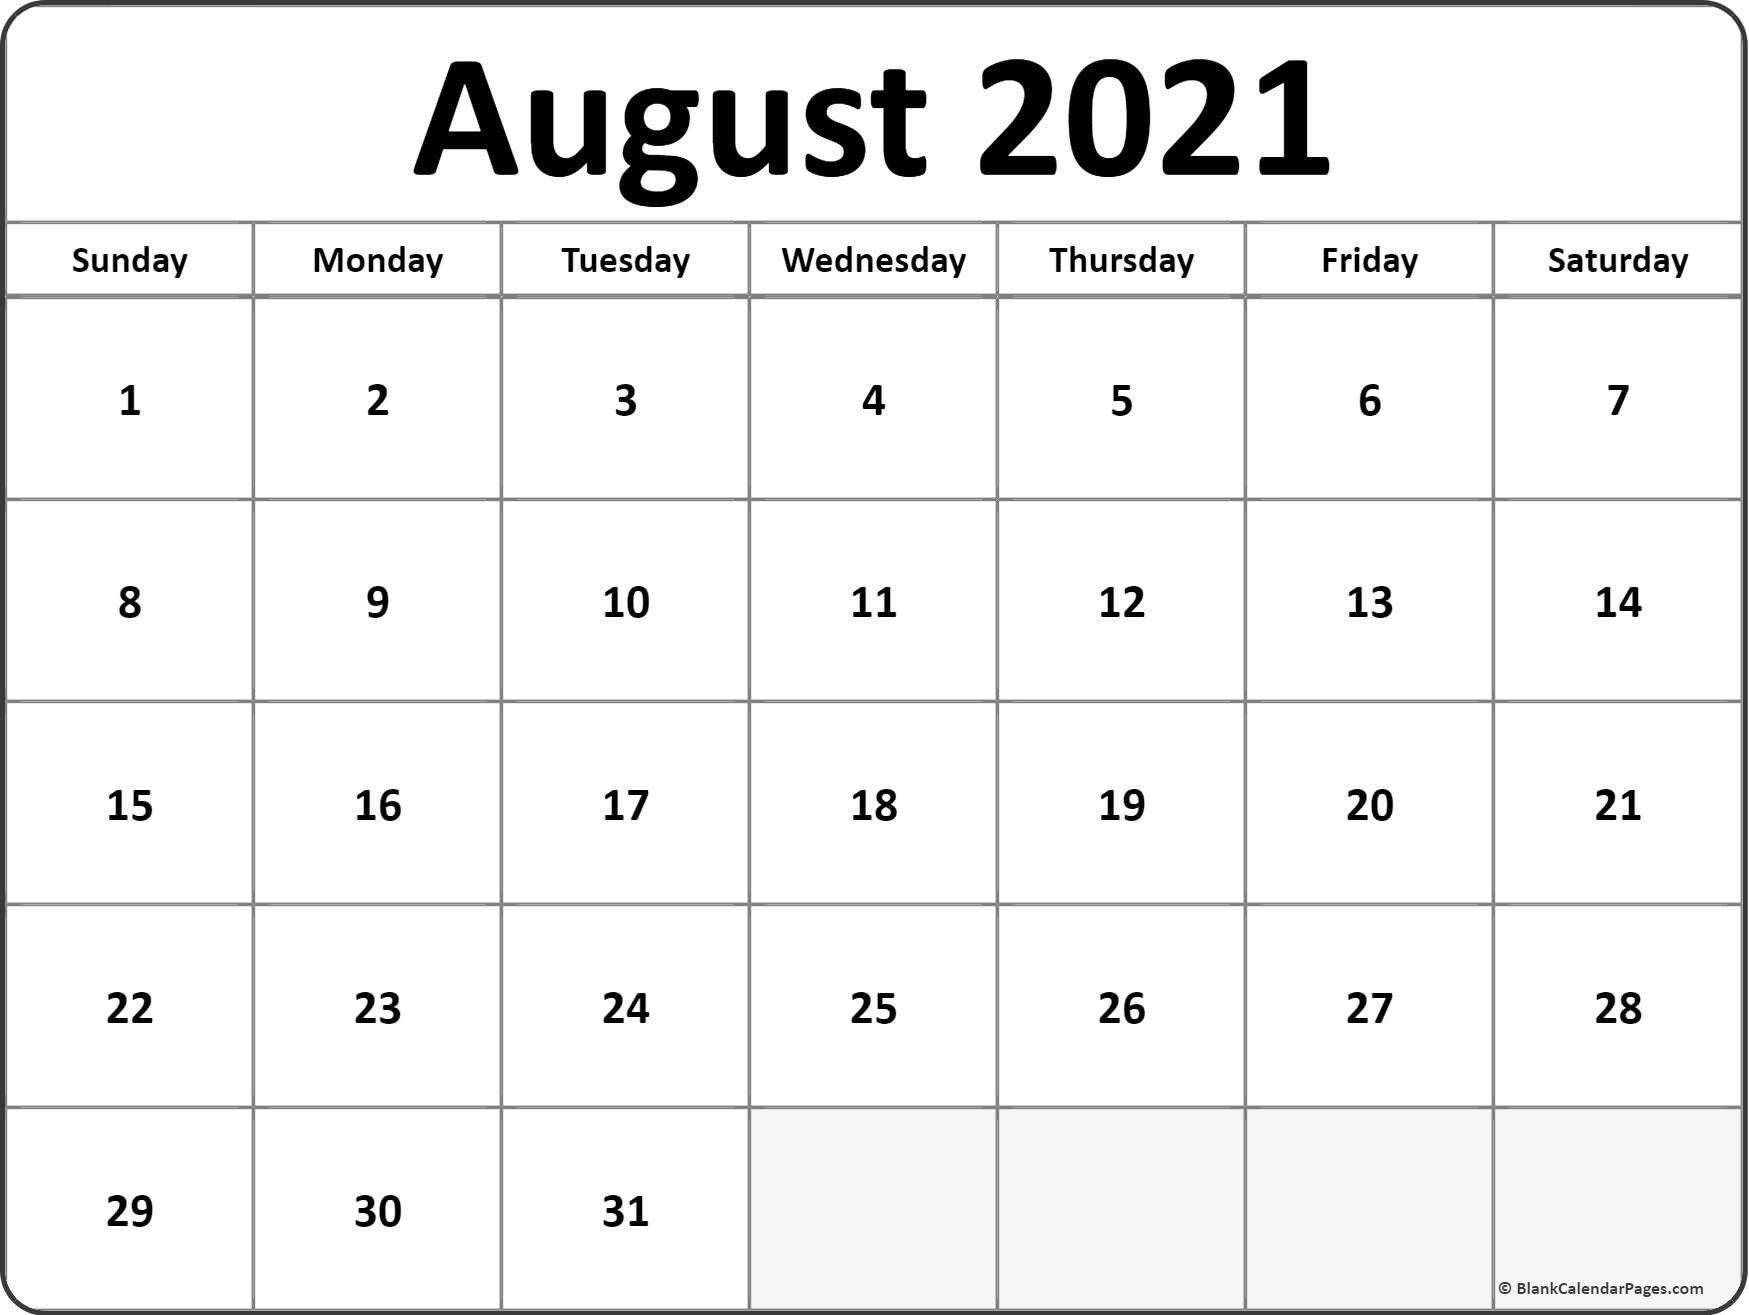 Catch August 2021 Calendar Pdf